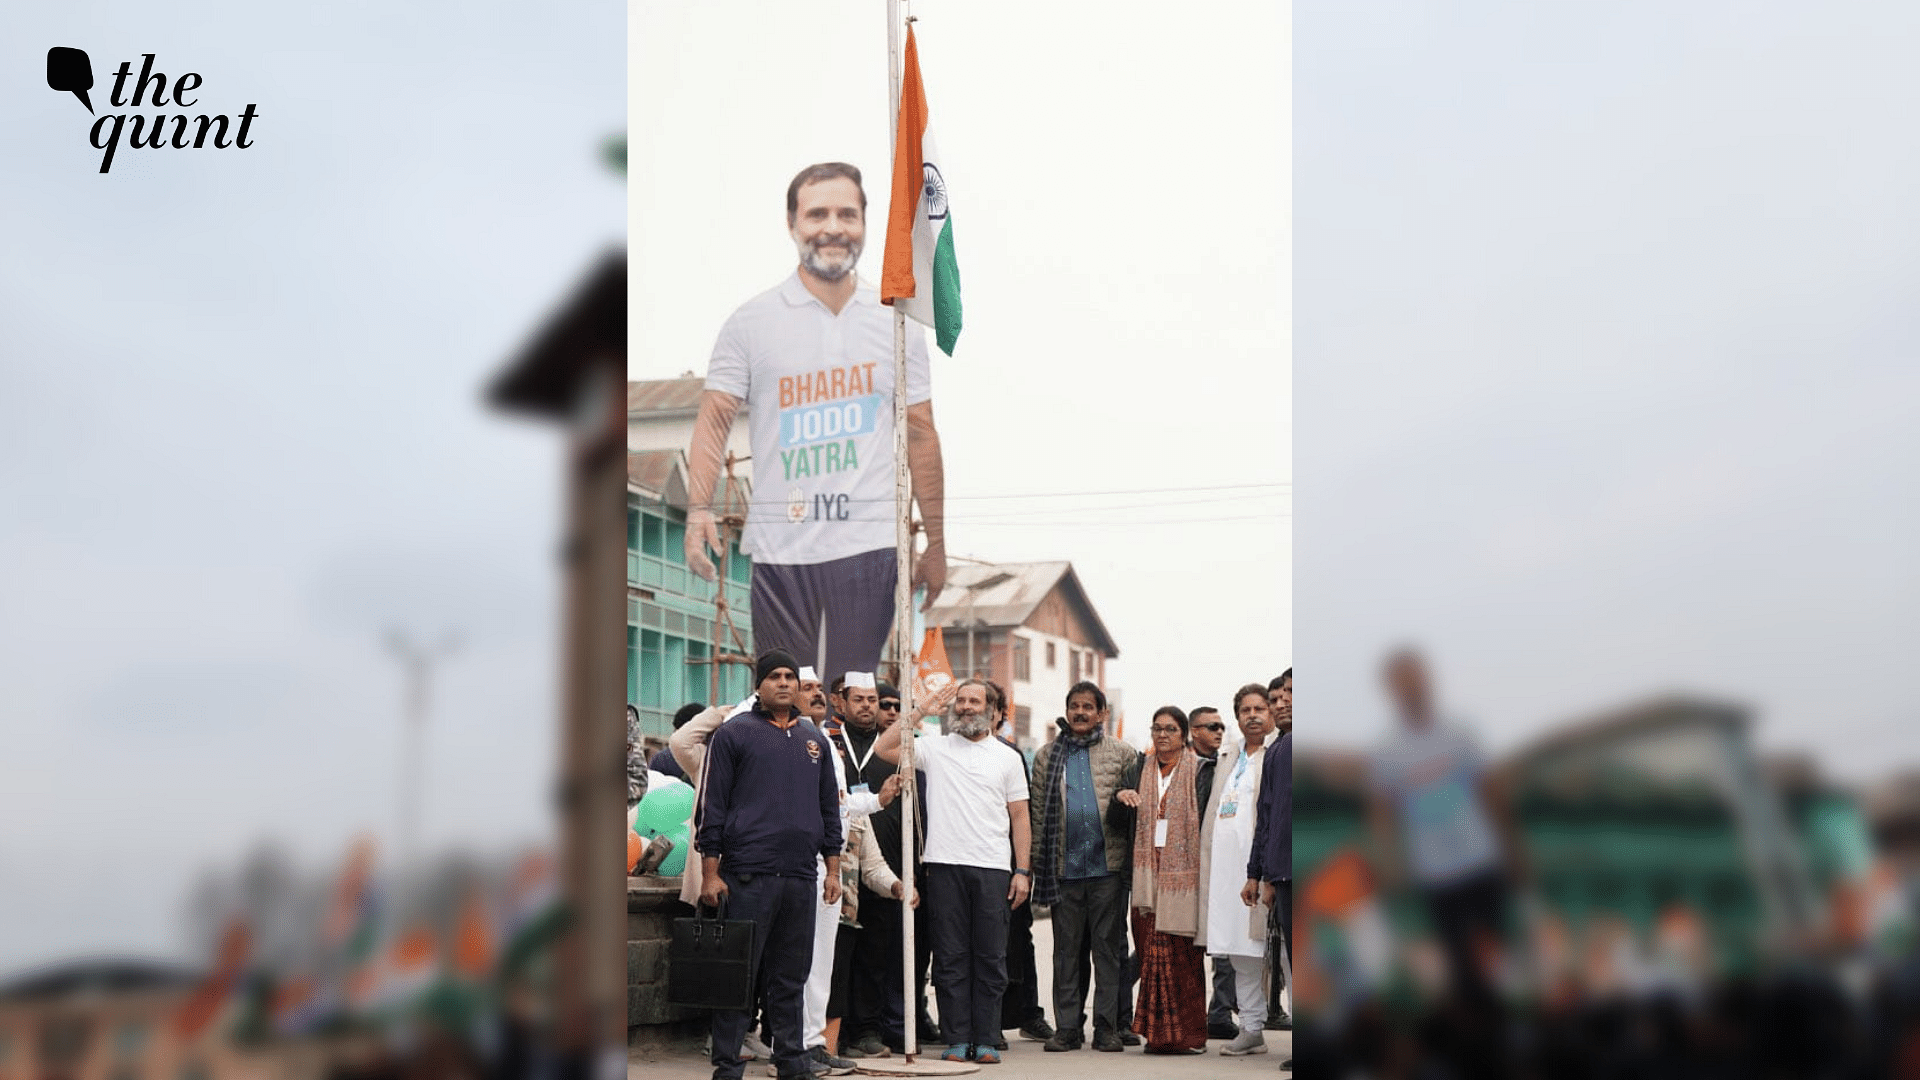 <div class="paragraphs"><p>Rahul Gandhi hoists Tricolour at Kashmir's Lal Chowk as Bharat Jodo Yatra ends.</p></div>